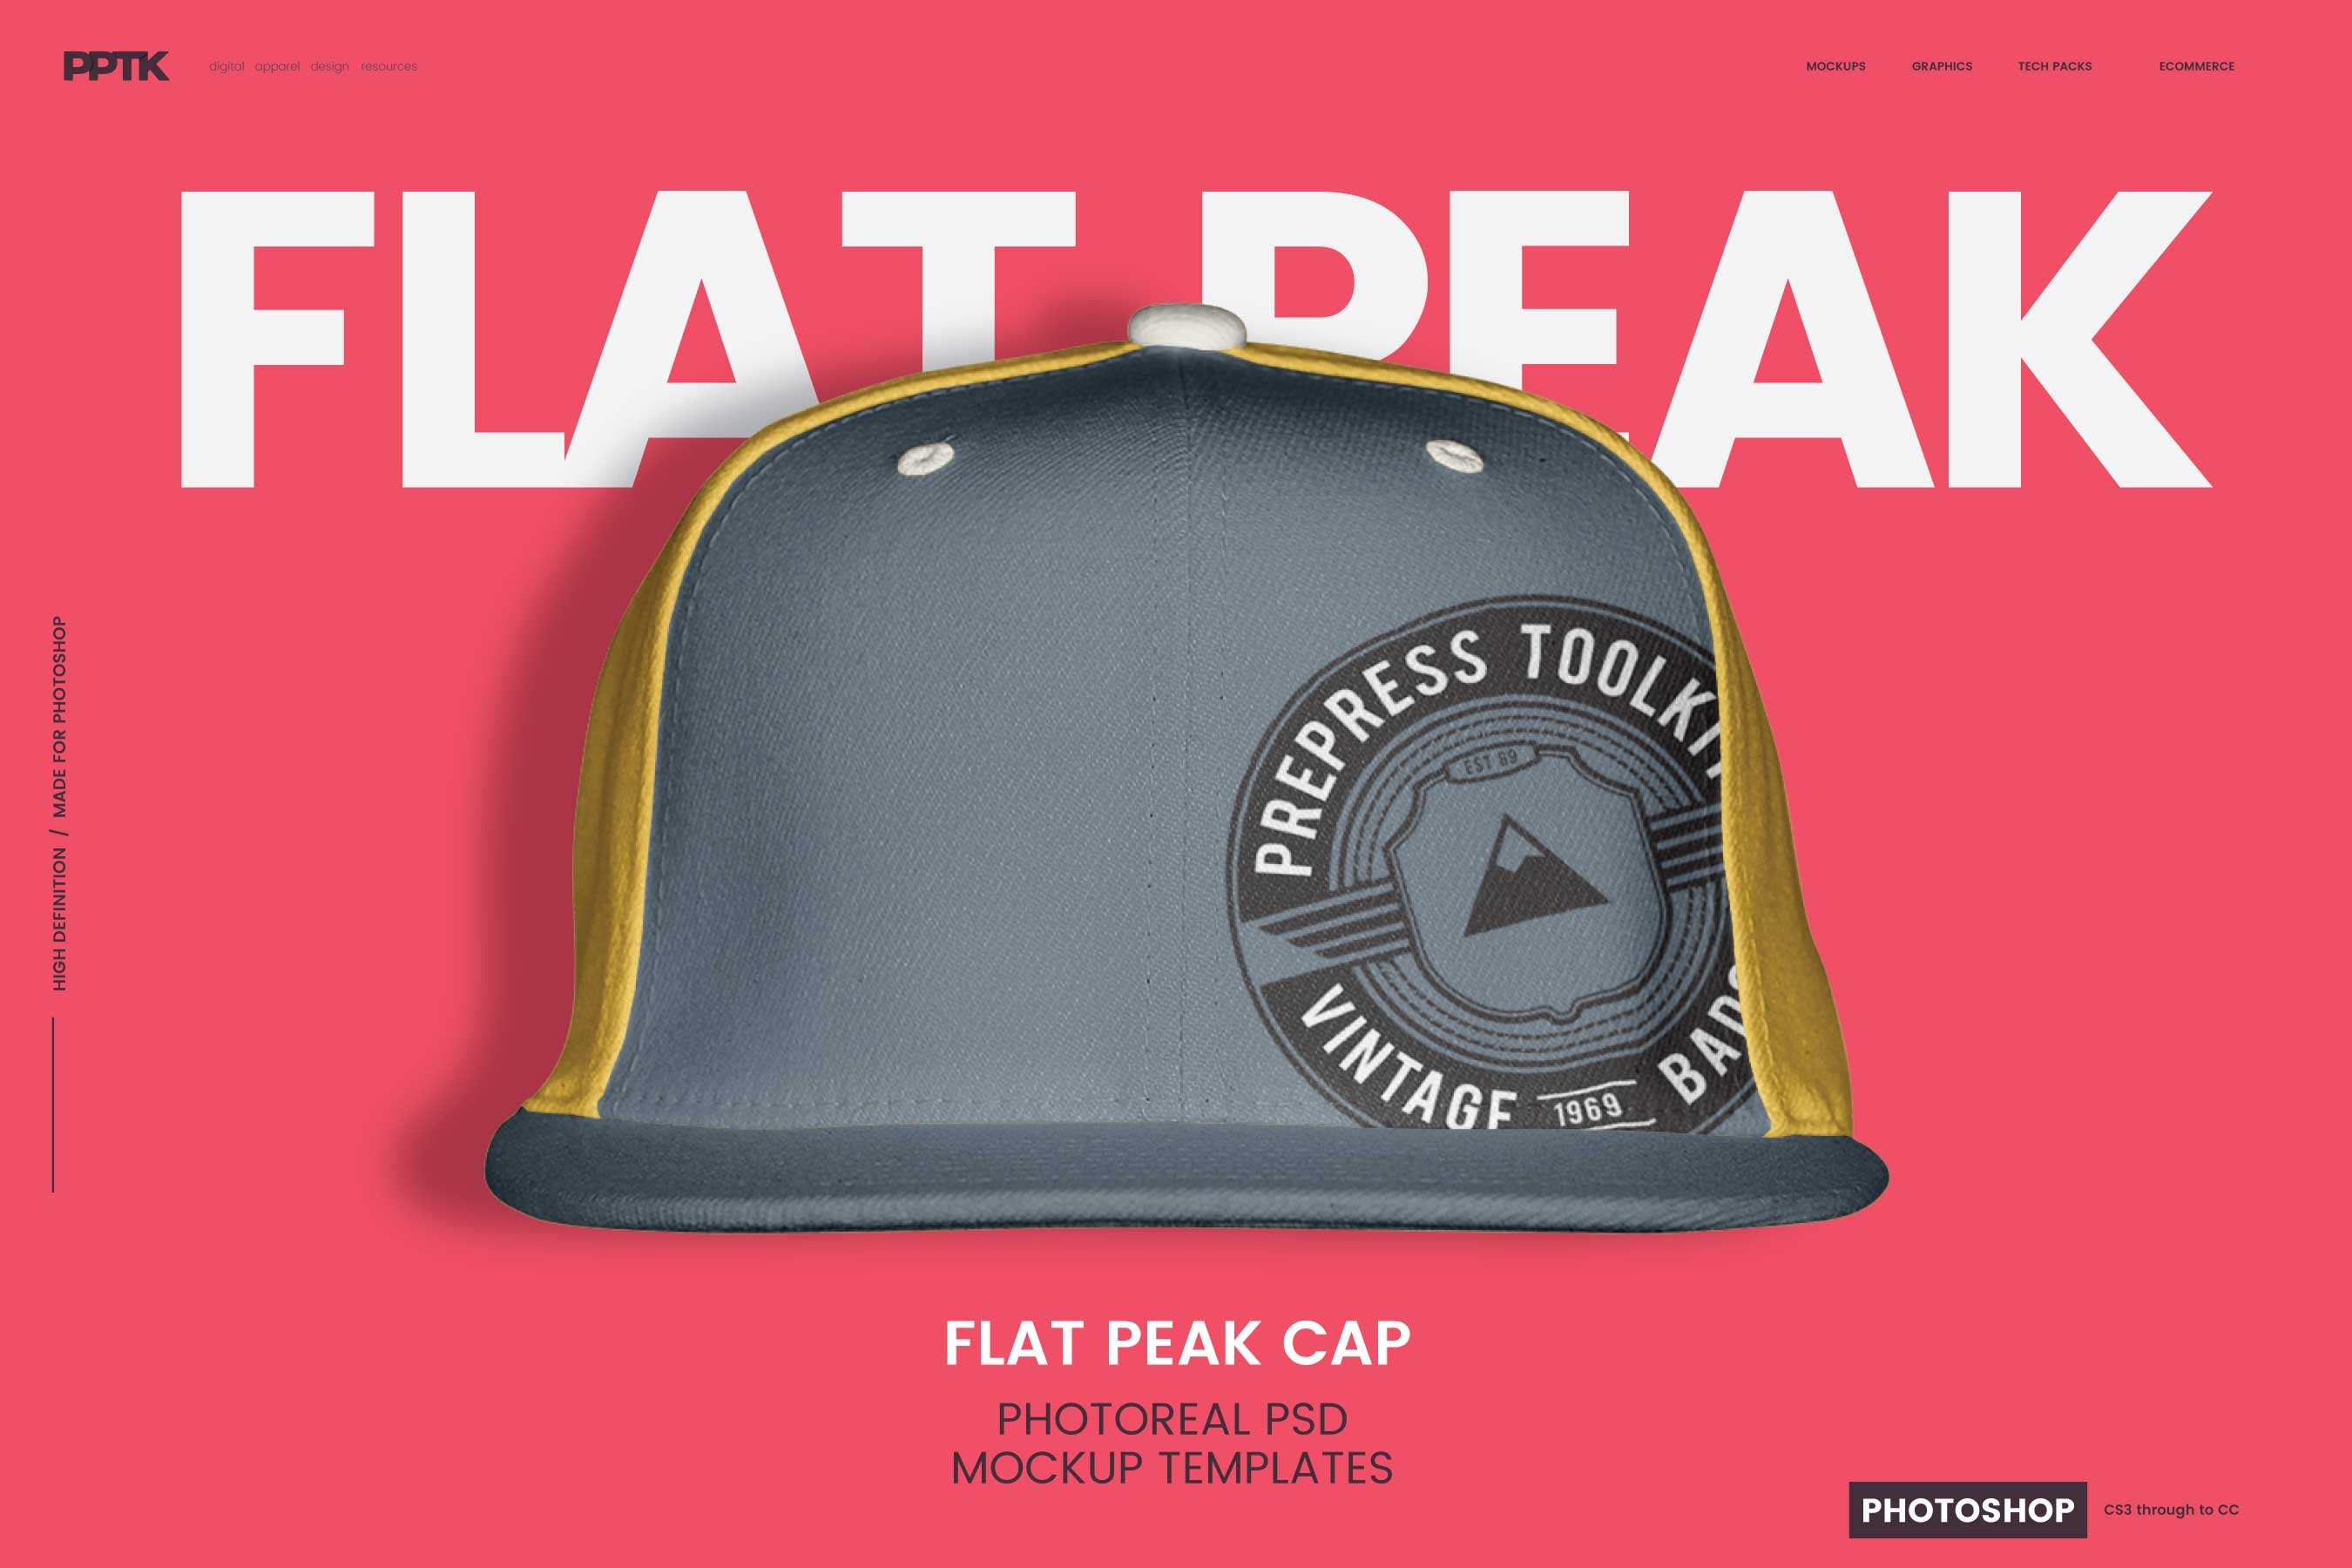 Flat Peak Cap Photoshop Template cover image.